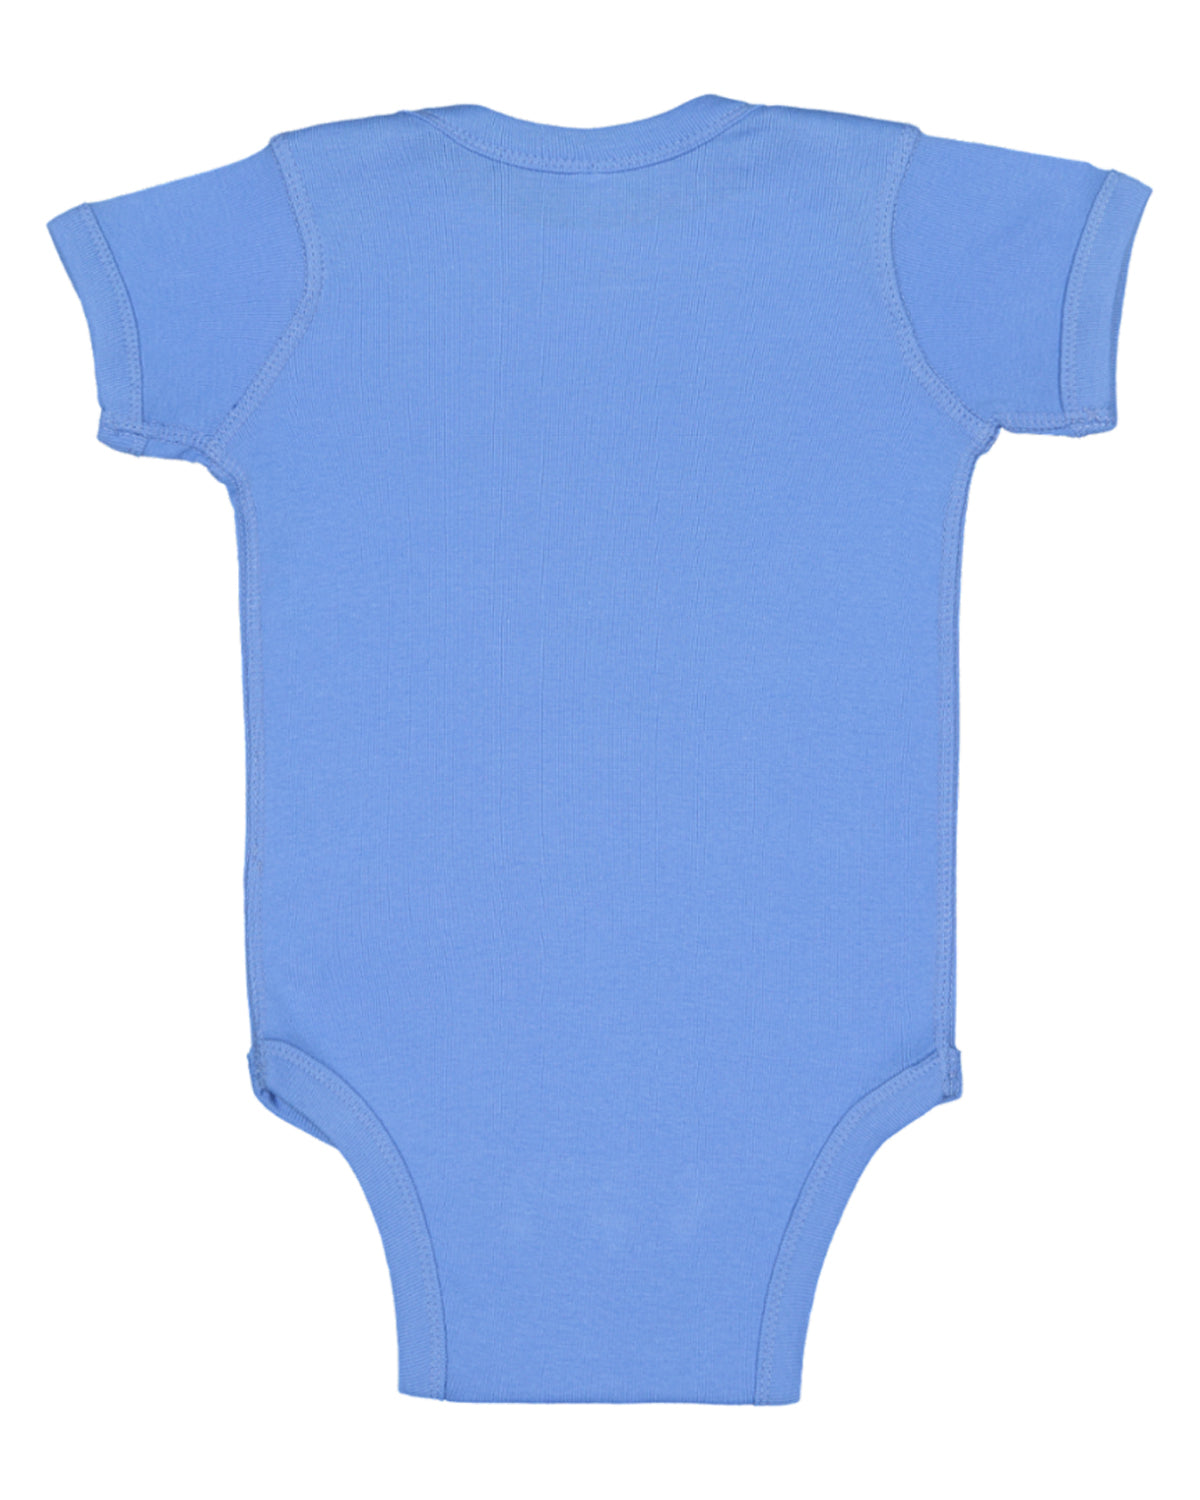 Short Sleeve -- Baby Bodysuit / Onesie -- 100% Cotton -- Carolina Blue